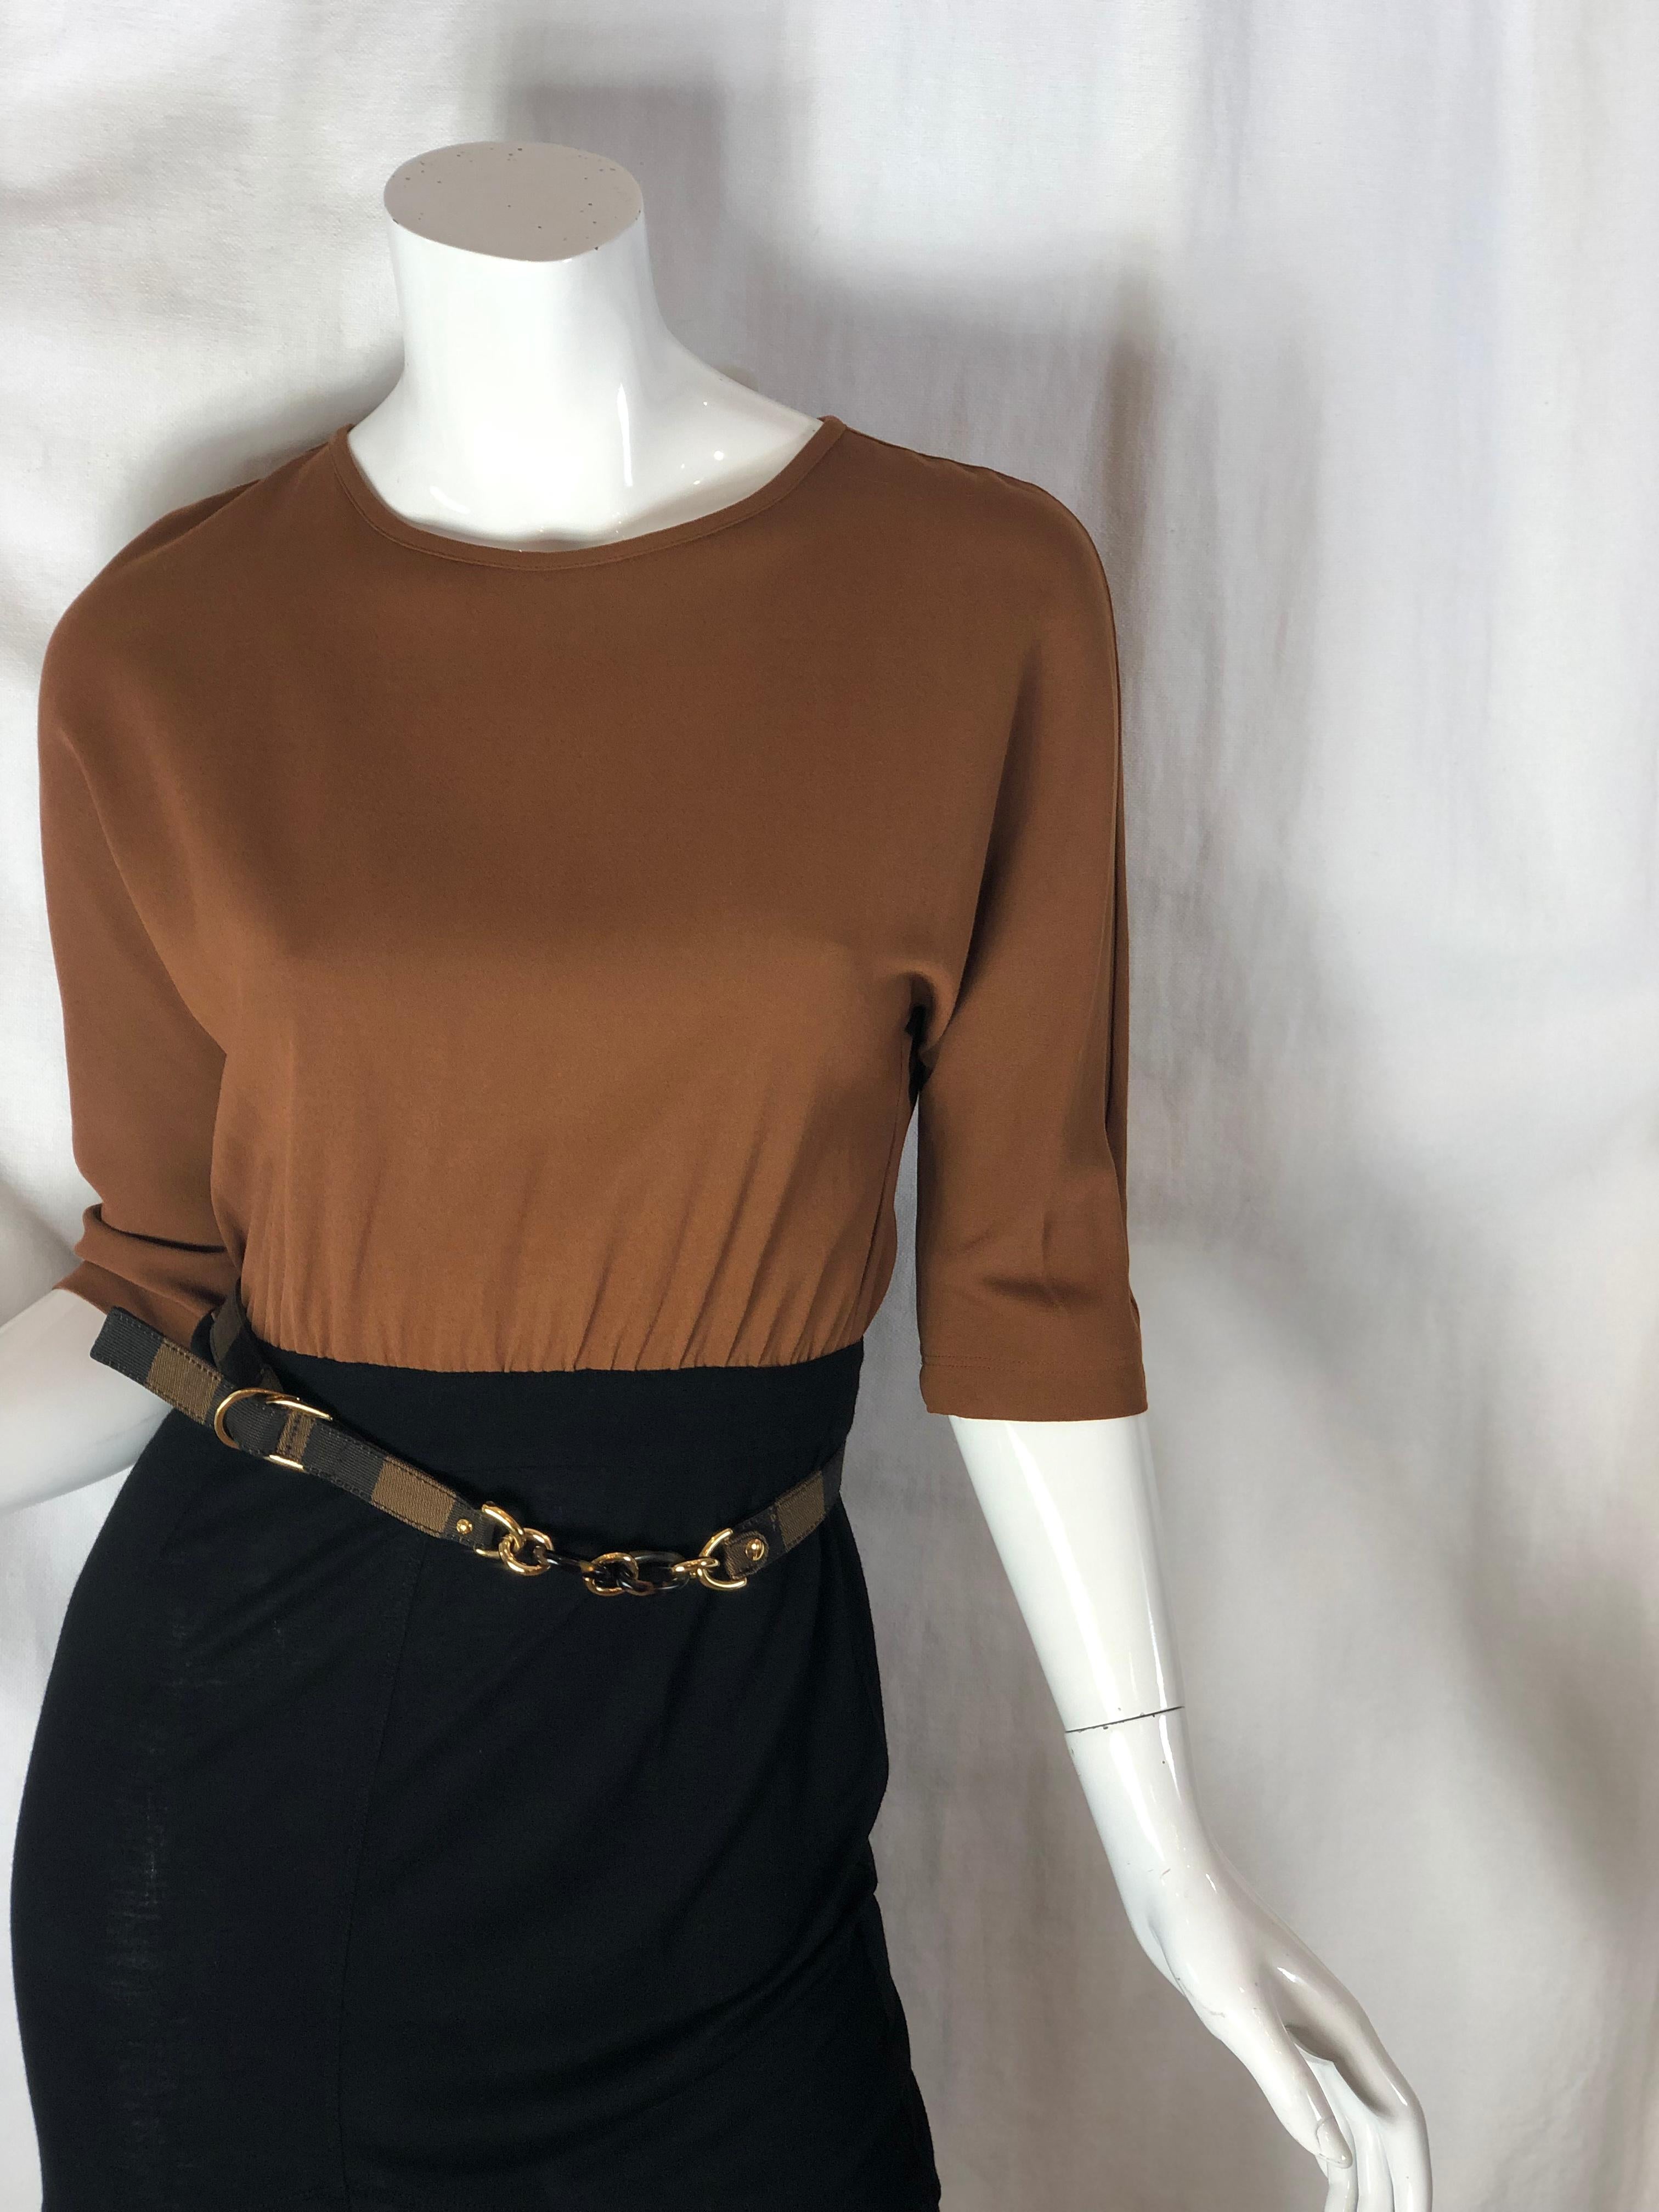 Fendi Half-Sleeve Color Block Empire Waist Dress w/ Belt
Size: 40
Color: Camel/Black